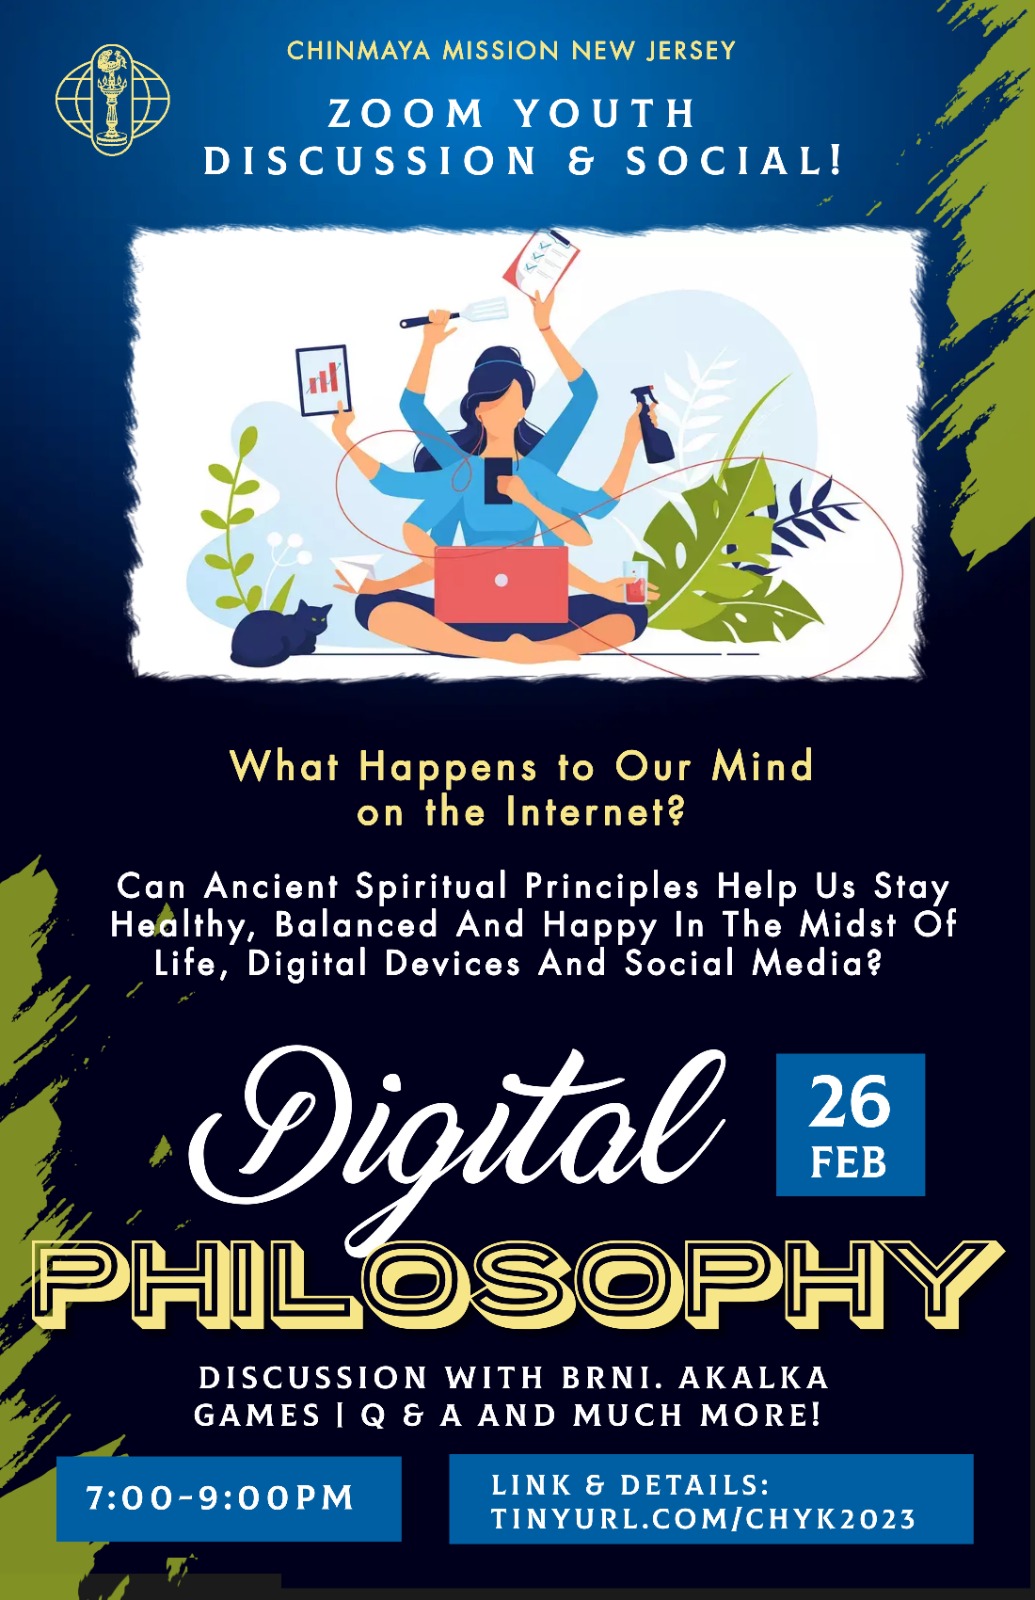 DigitalPhilosophy